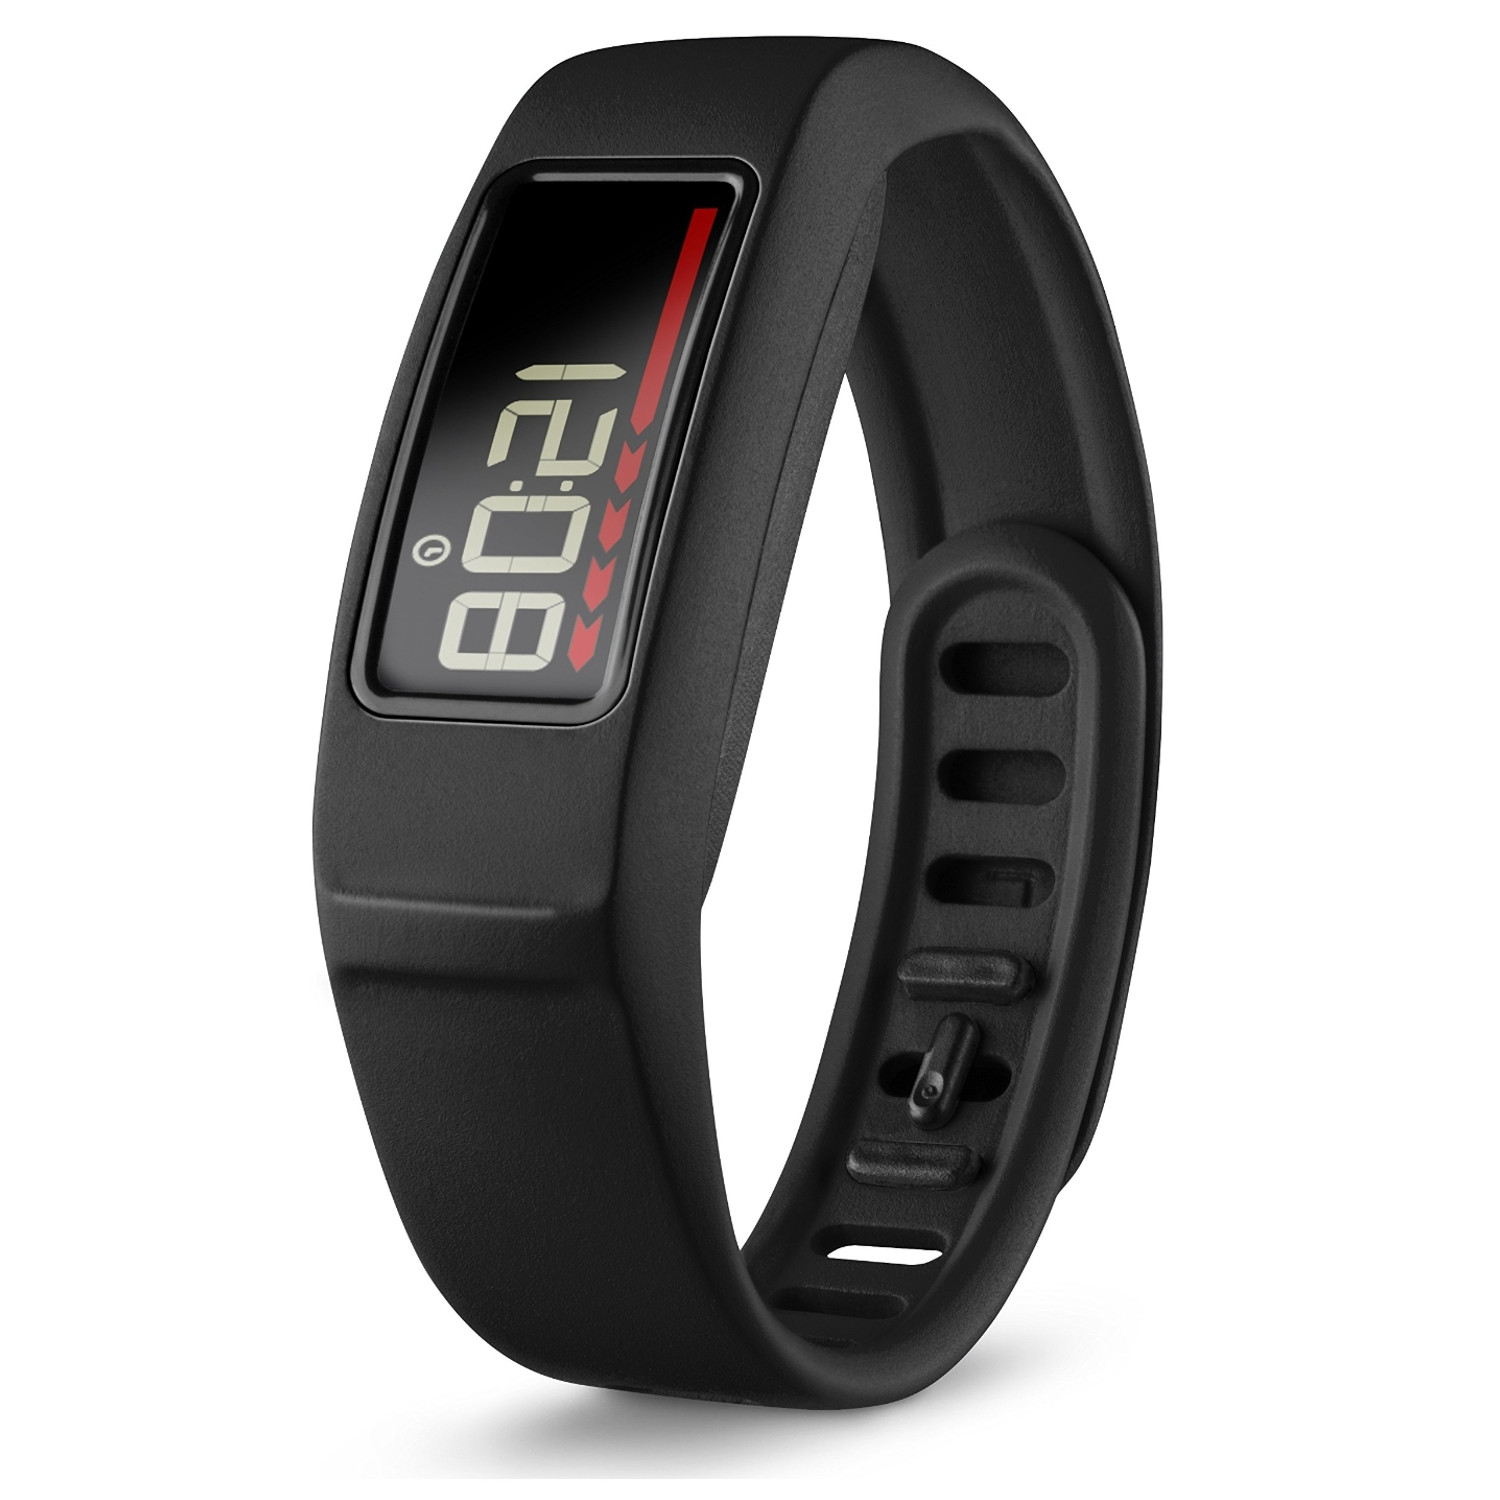  Smartband fitness Garmin Vivofit 2, Negru + Heart Rate Monitor 